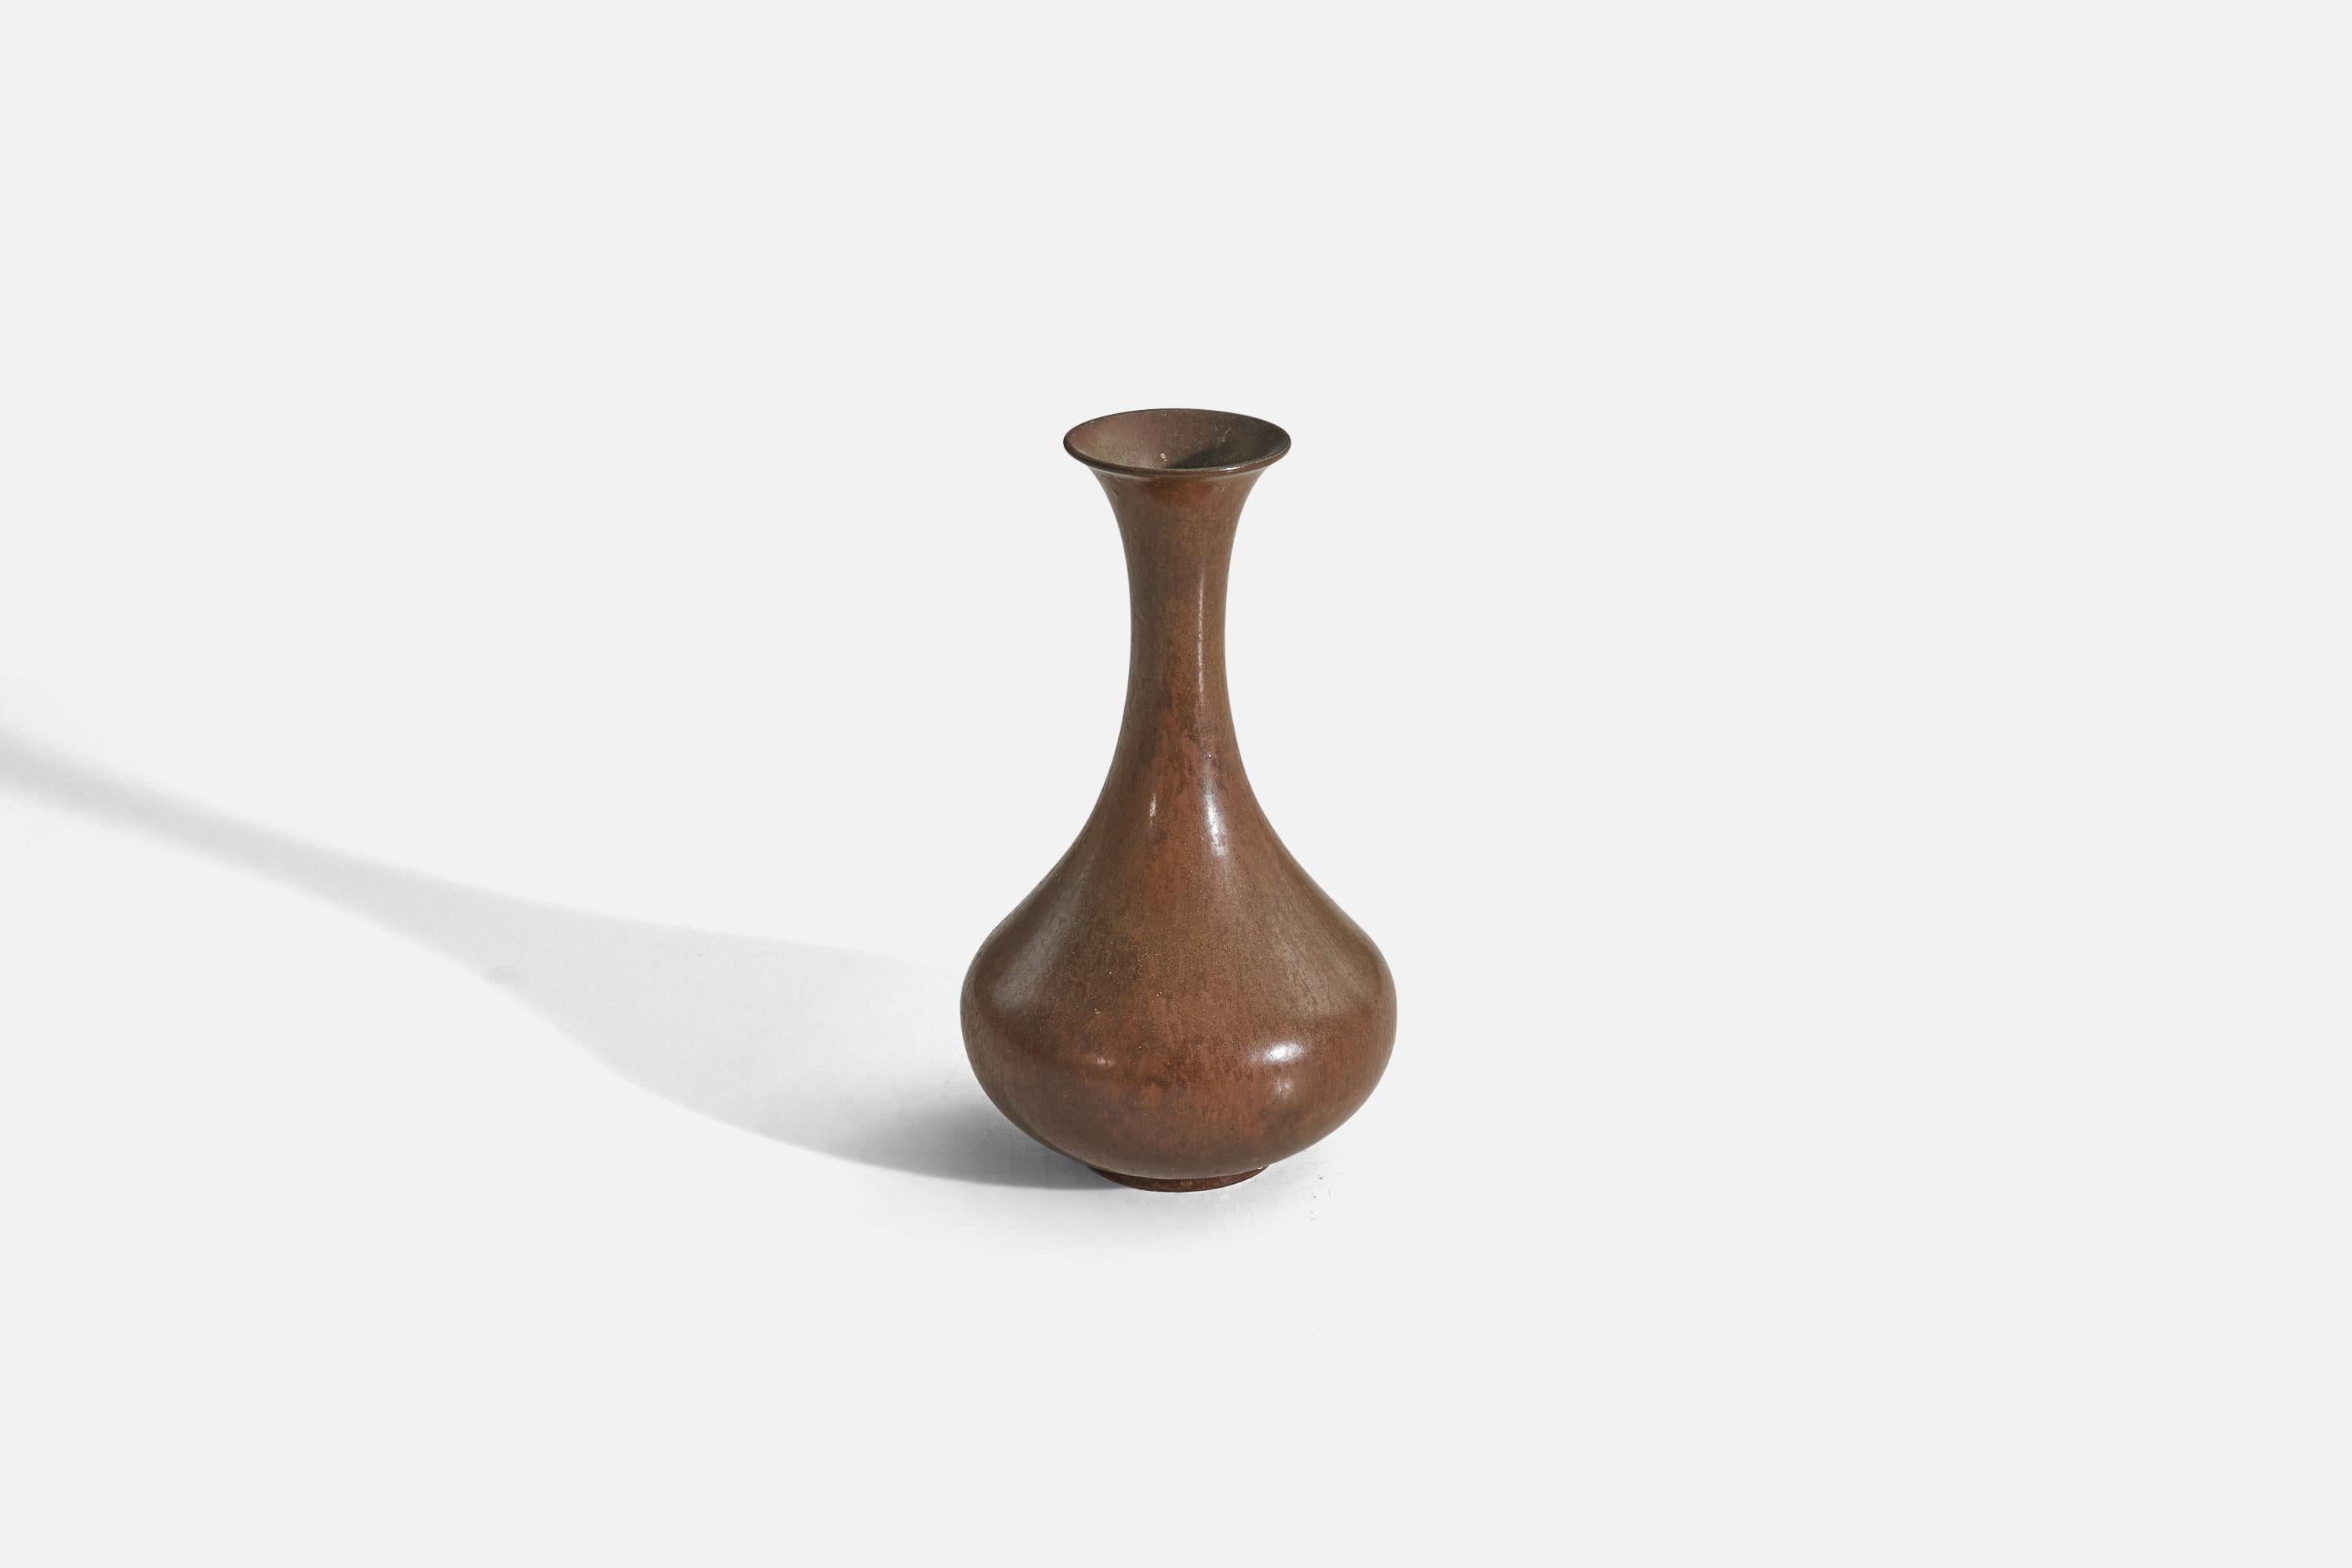 A brown-glazed stoneware vase, 